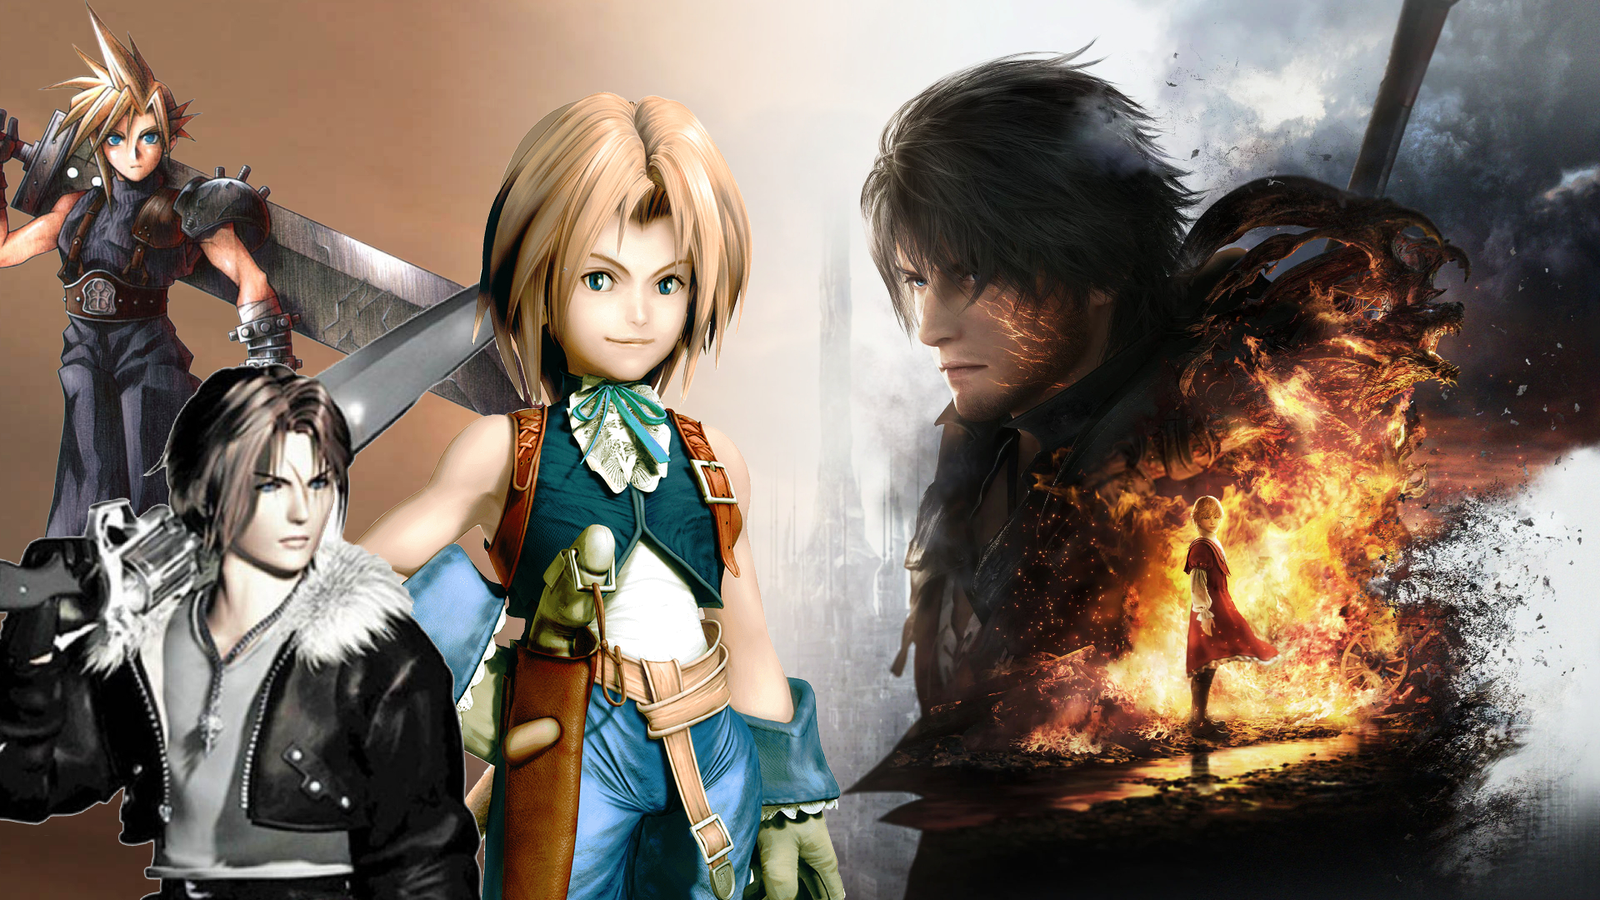 Final Fantasy XVI should be a 10/10 game.